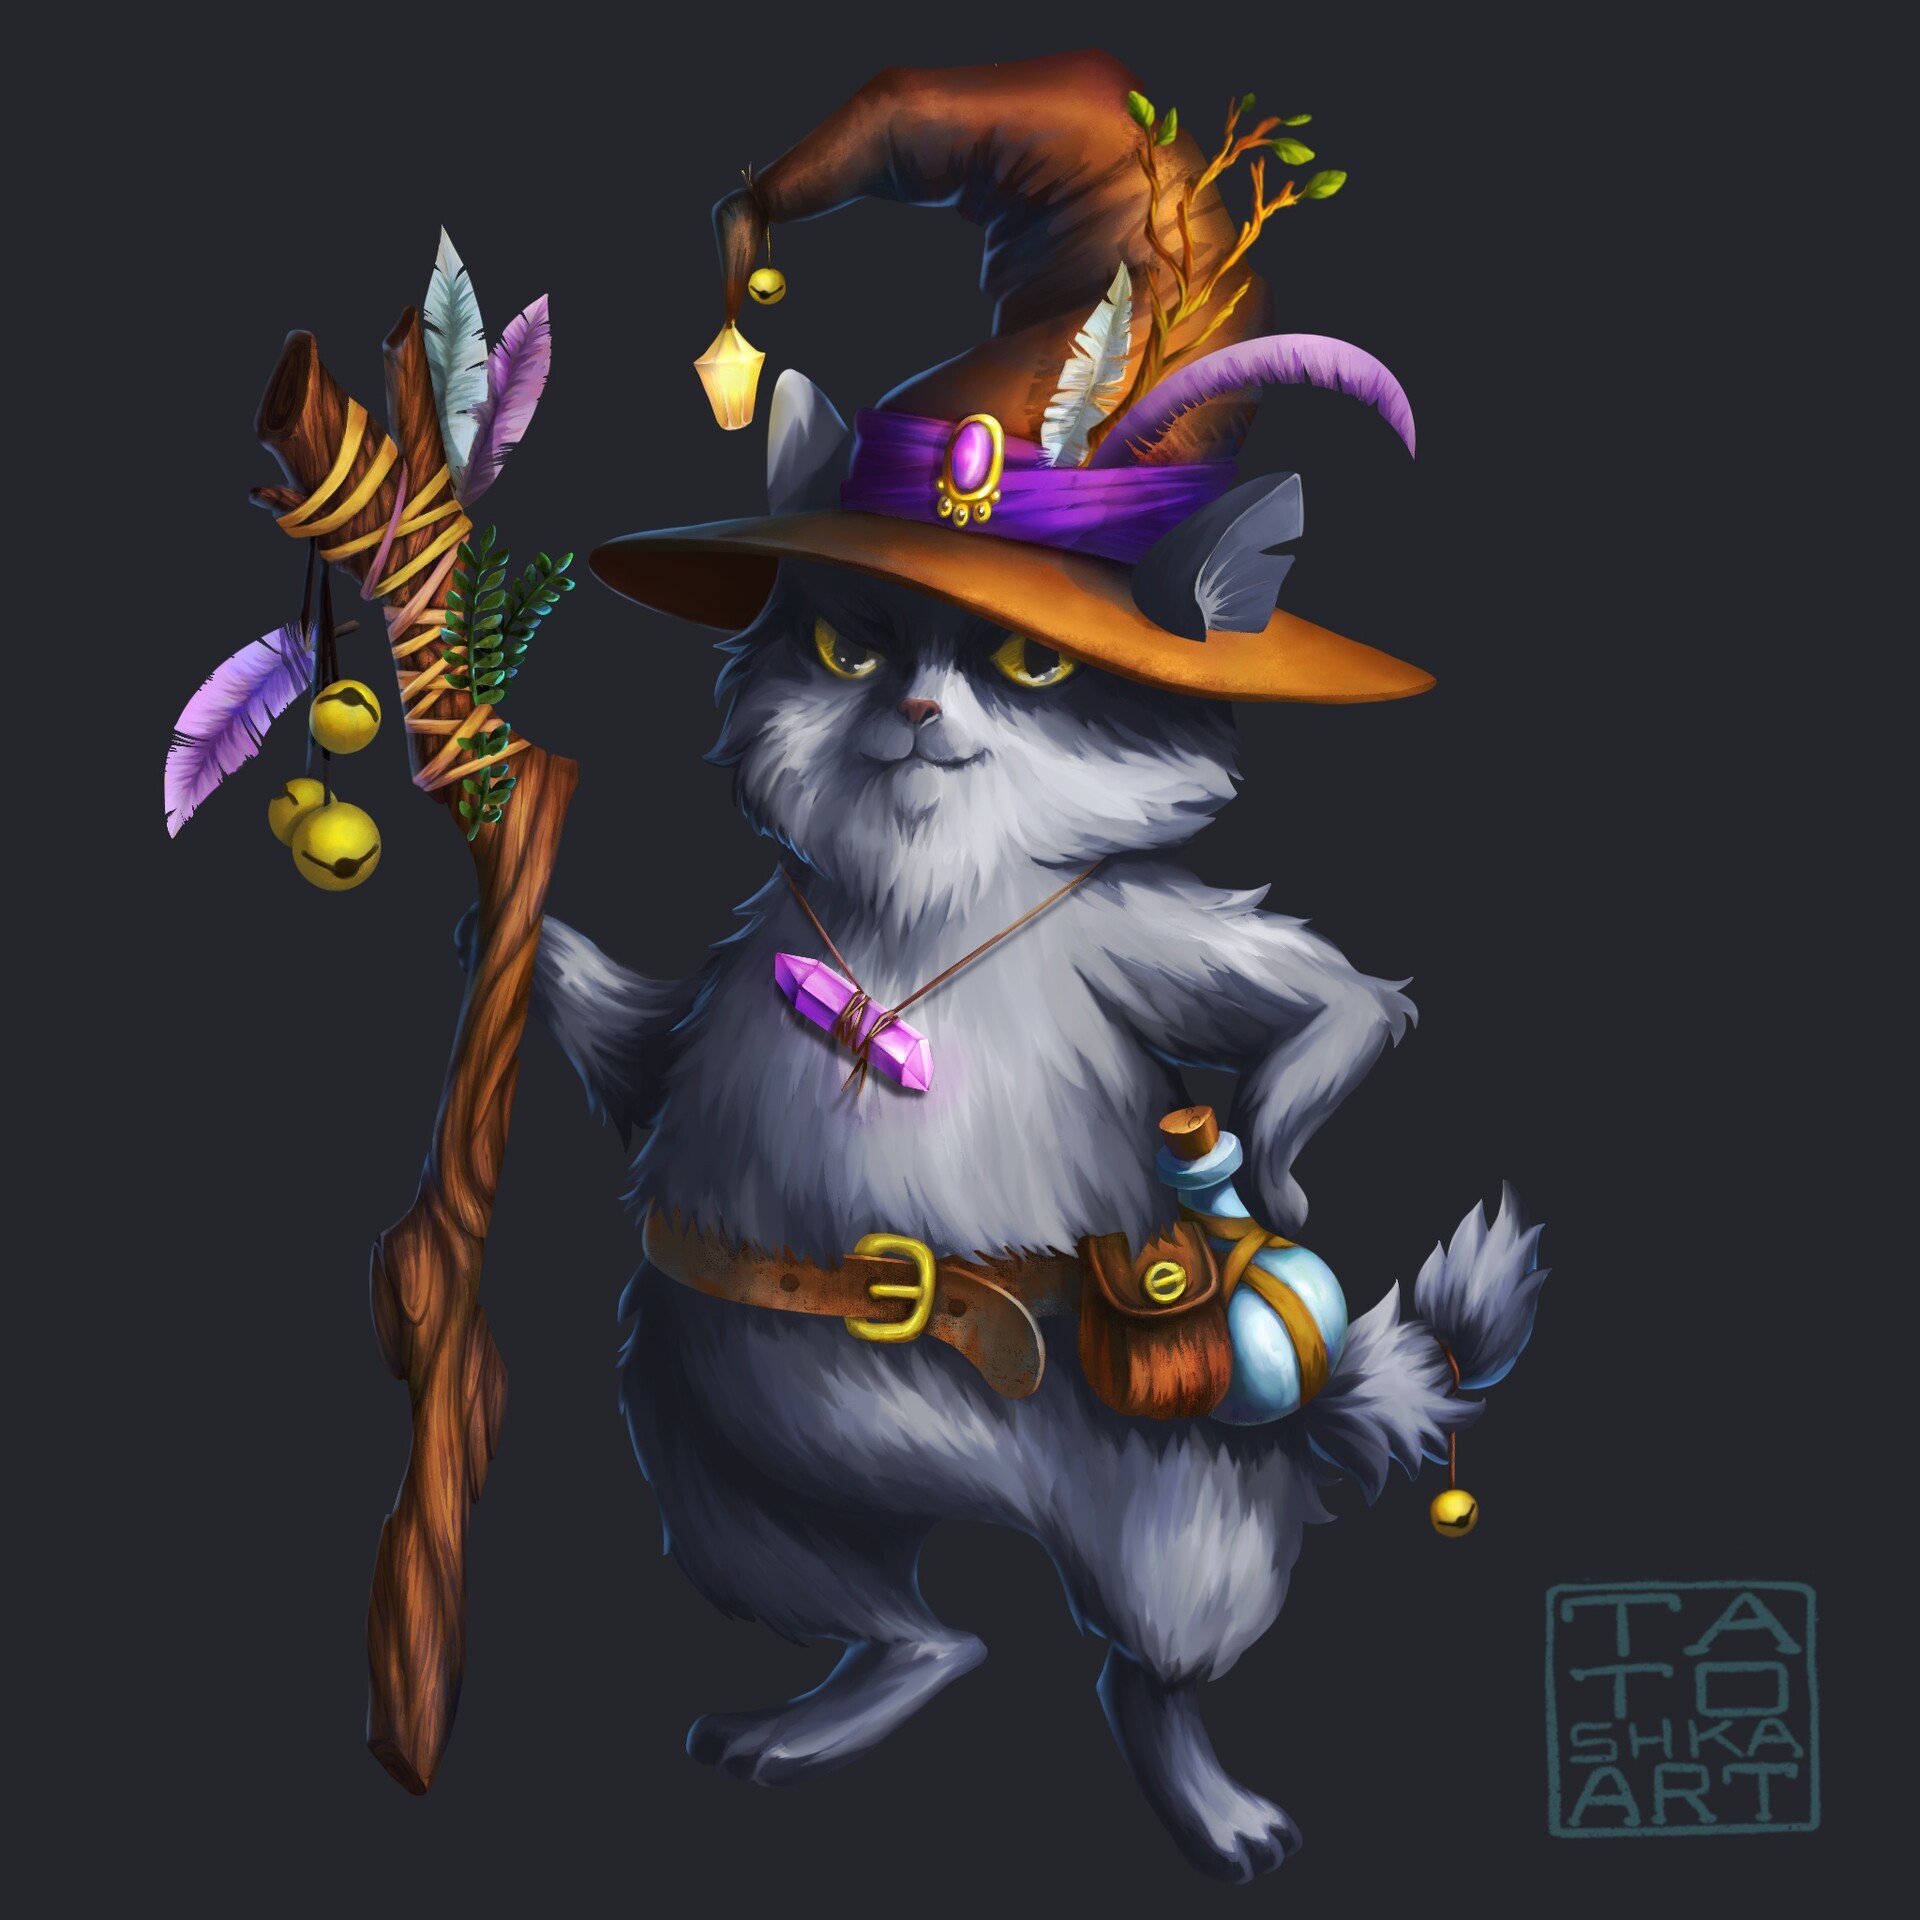 Art by Ifer — Cat in a wizard hat request